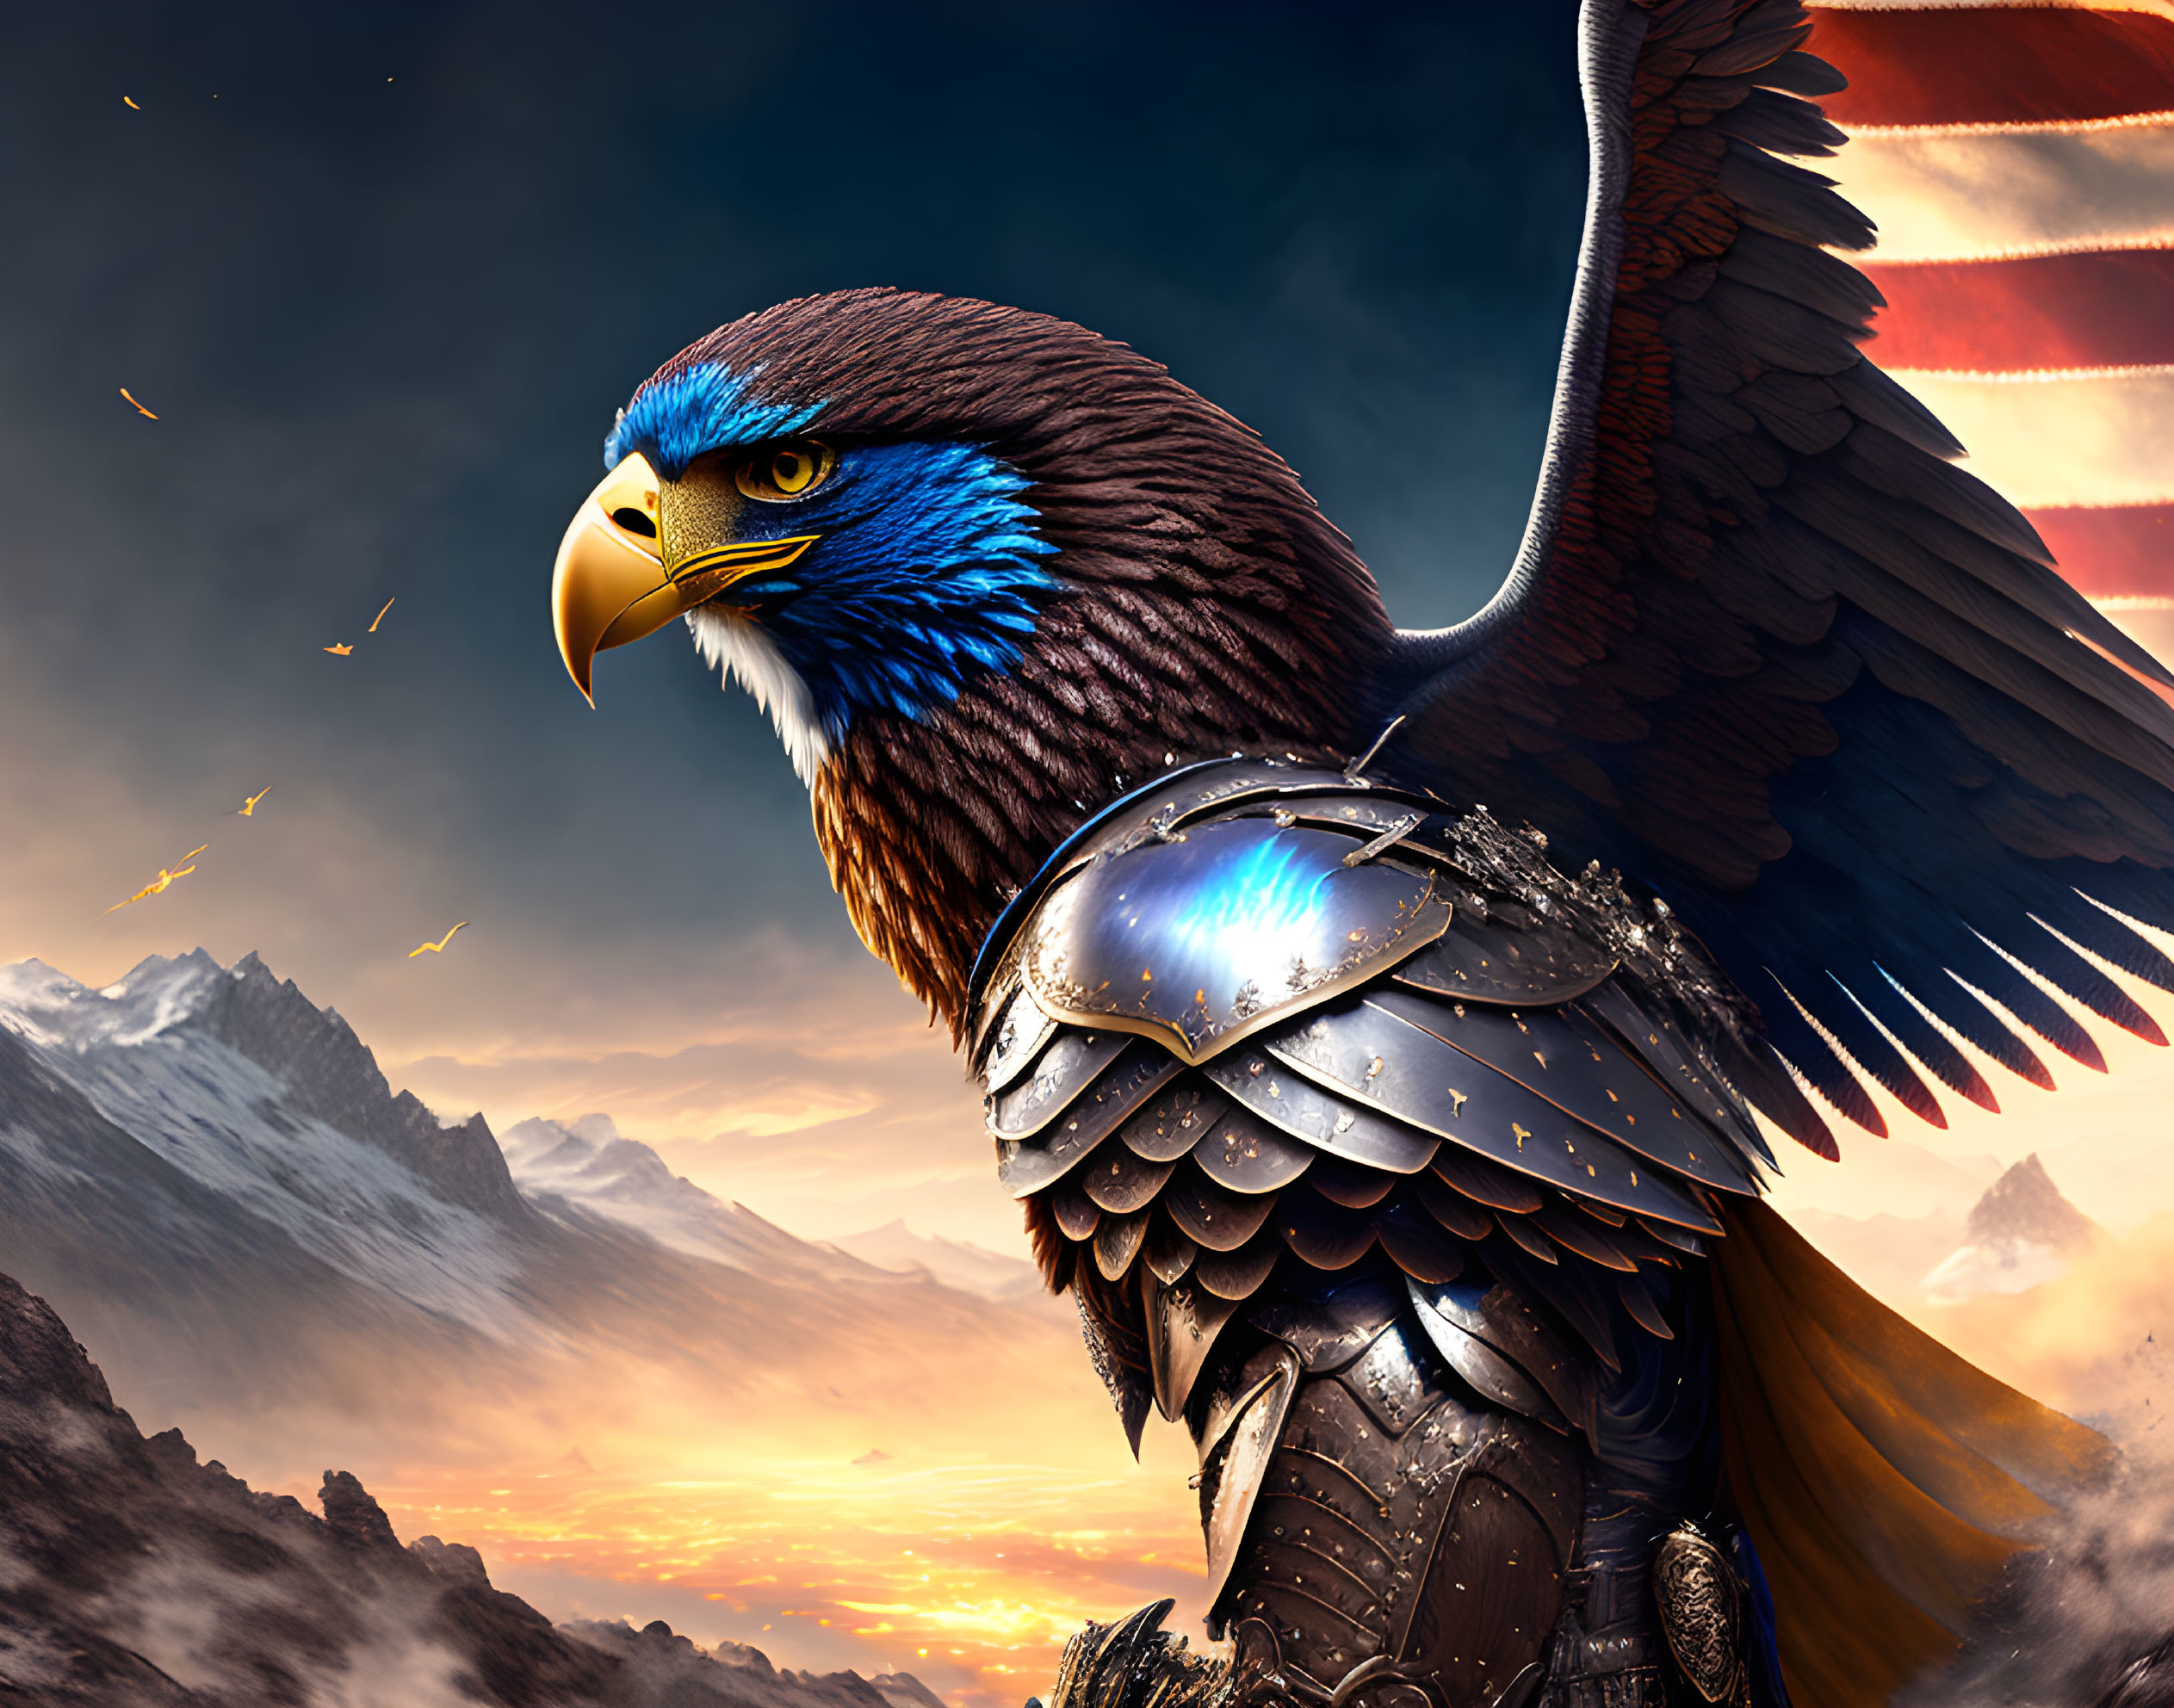 Majestic eagle with metallic armor in American flag motif